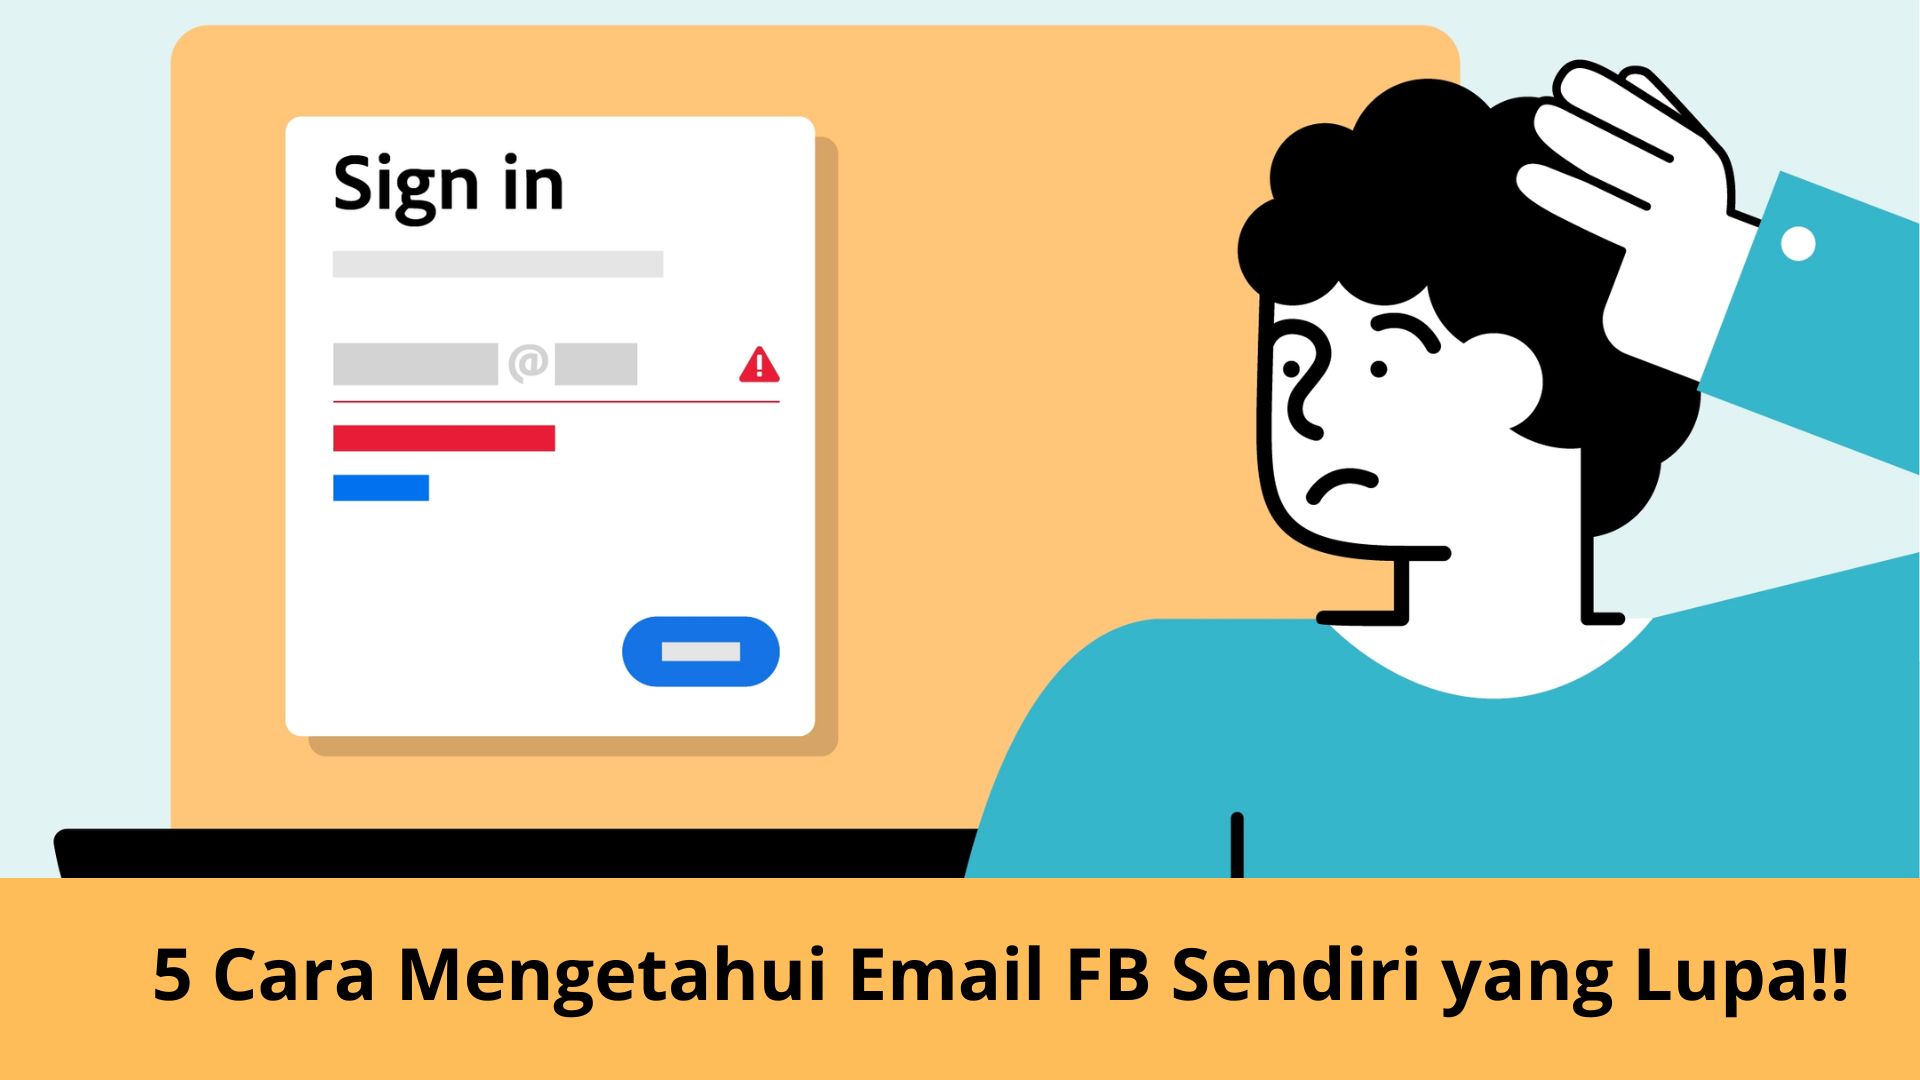 Cara Mengetahui Email Facebook Yang Lupa. 5 Cara Mengetahui Email FB Sendiri Yang Lupa!!